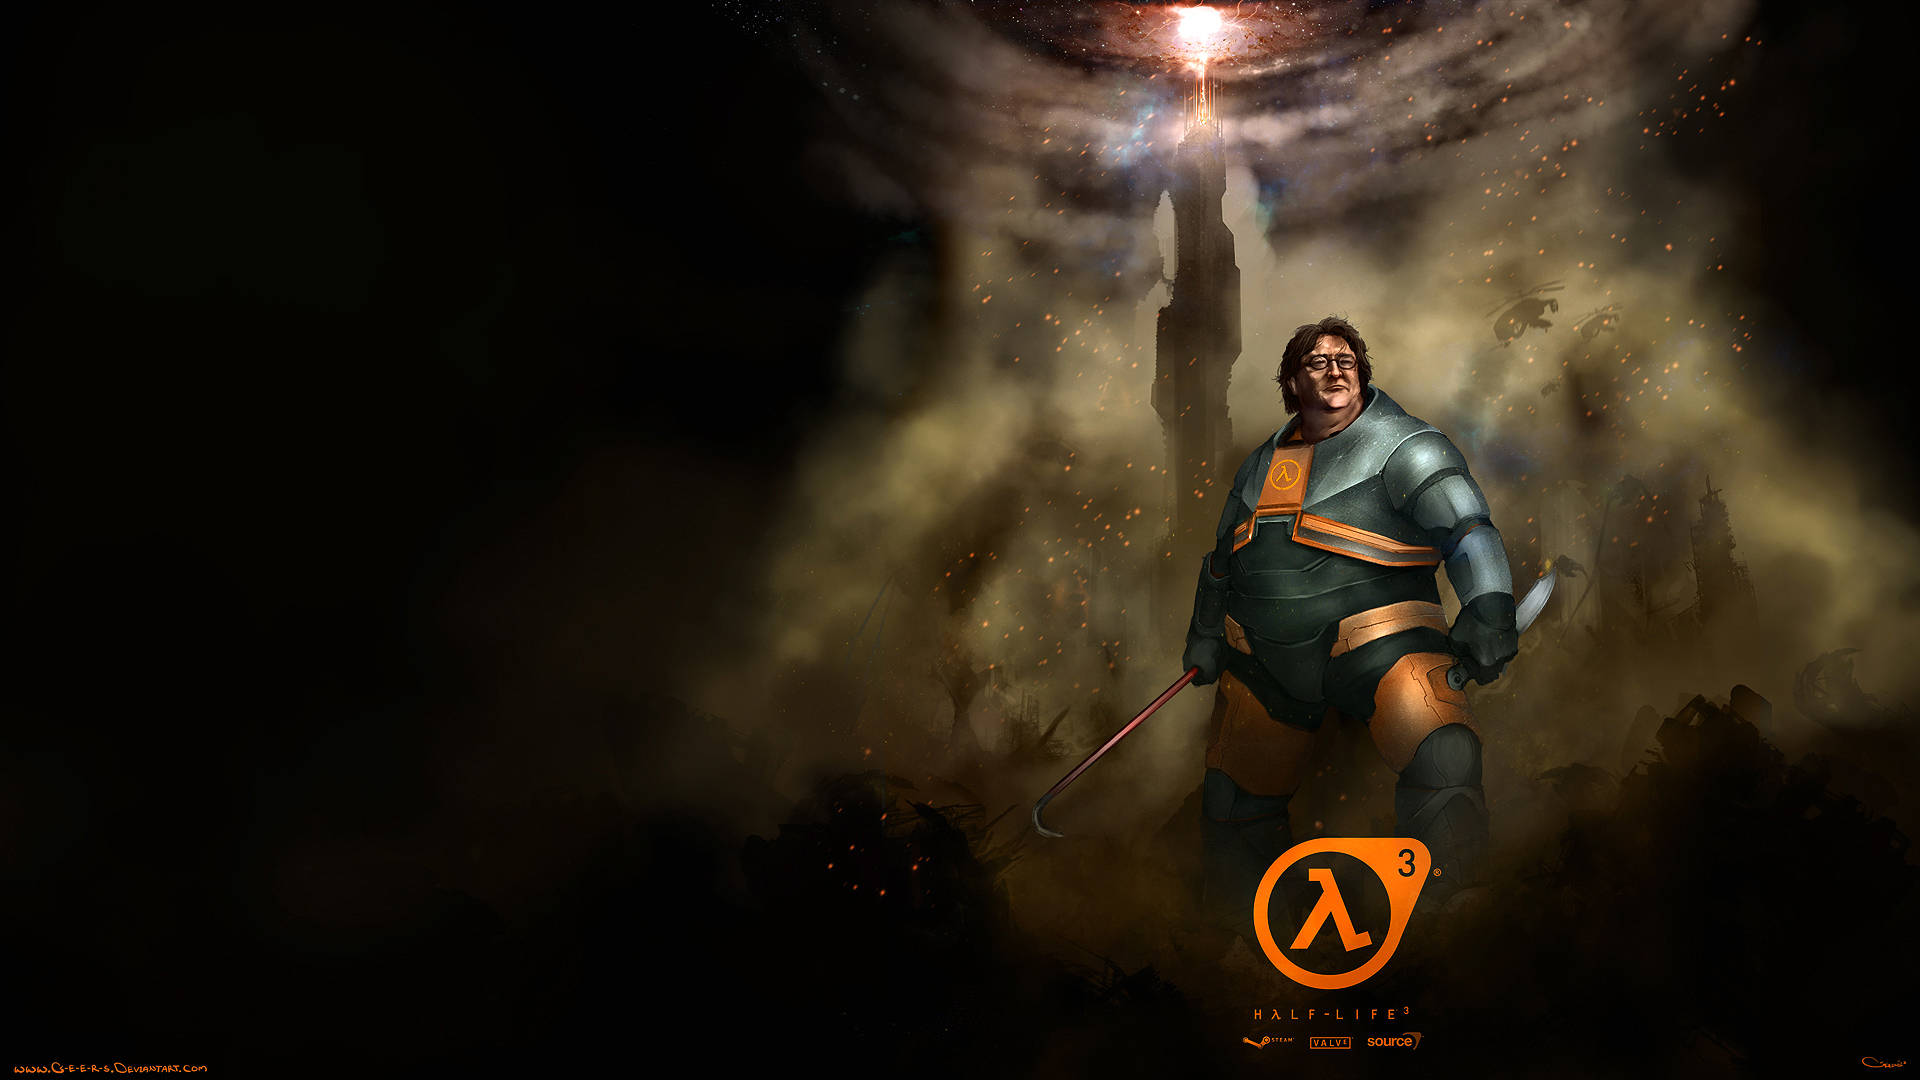 Half-life Gabe Newell Art